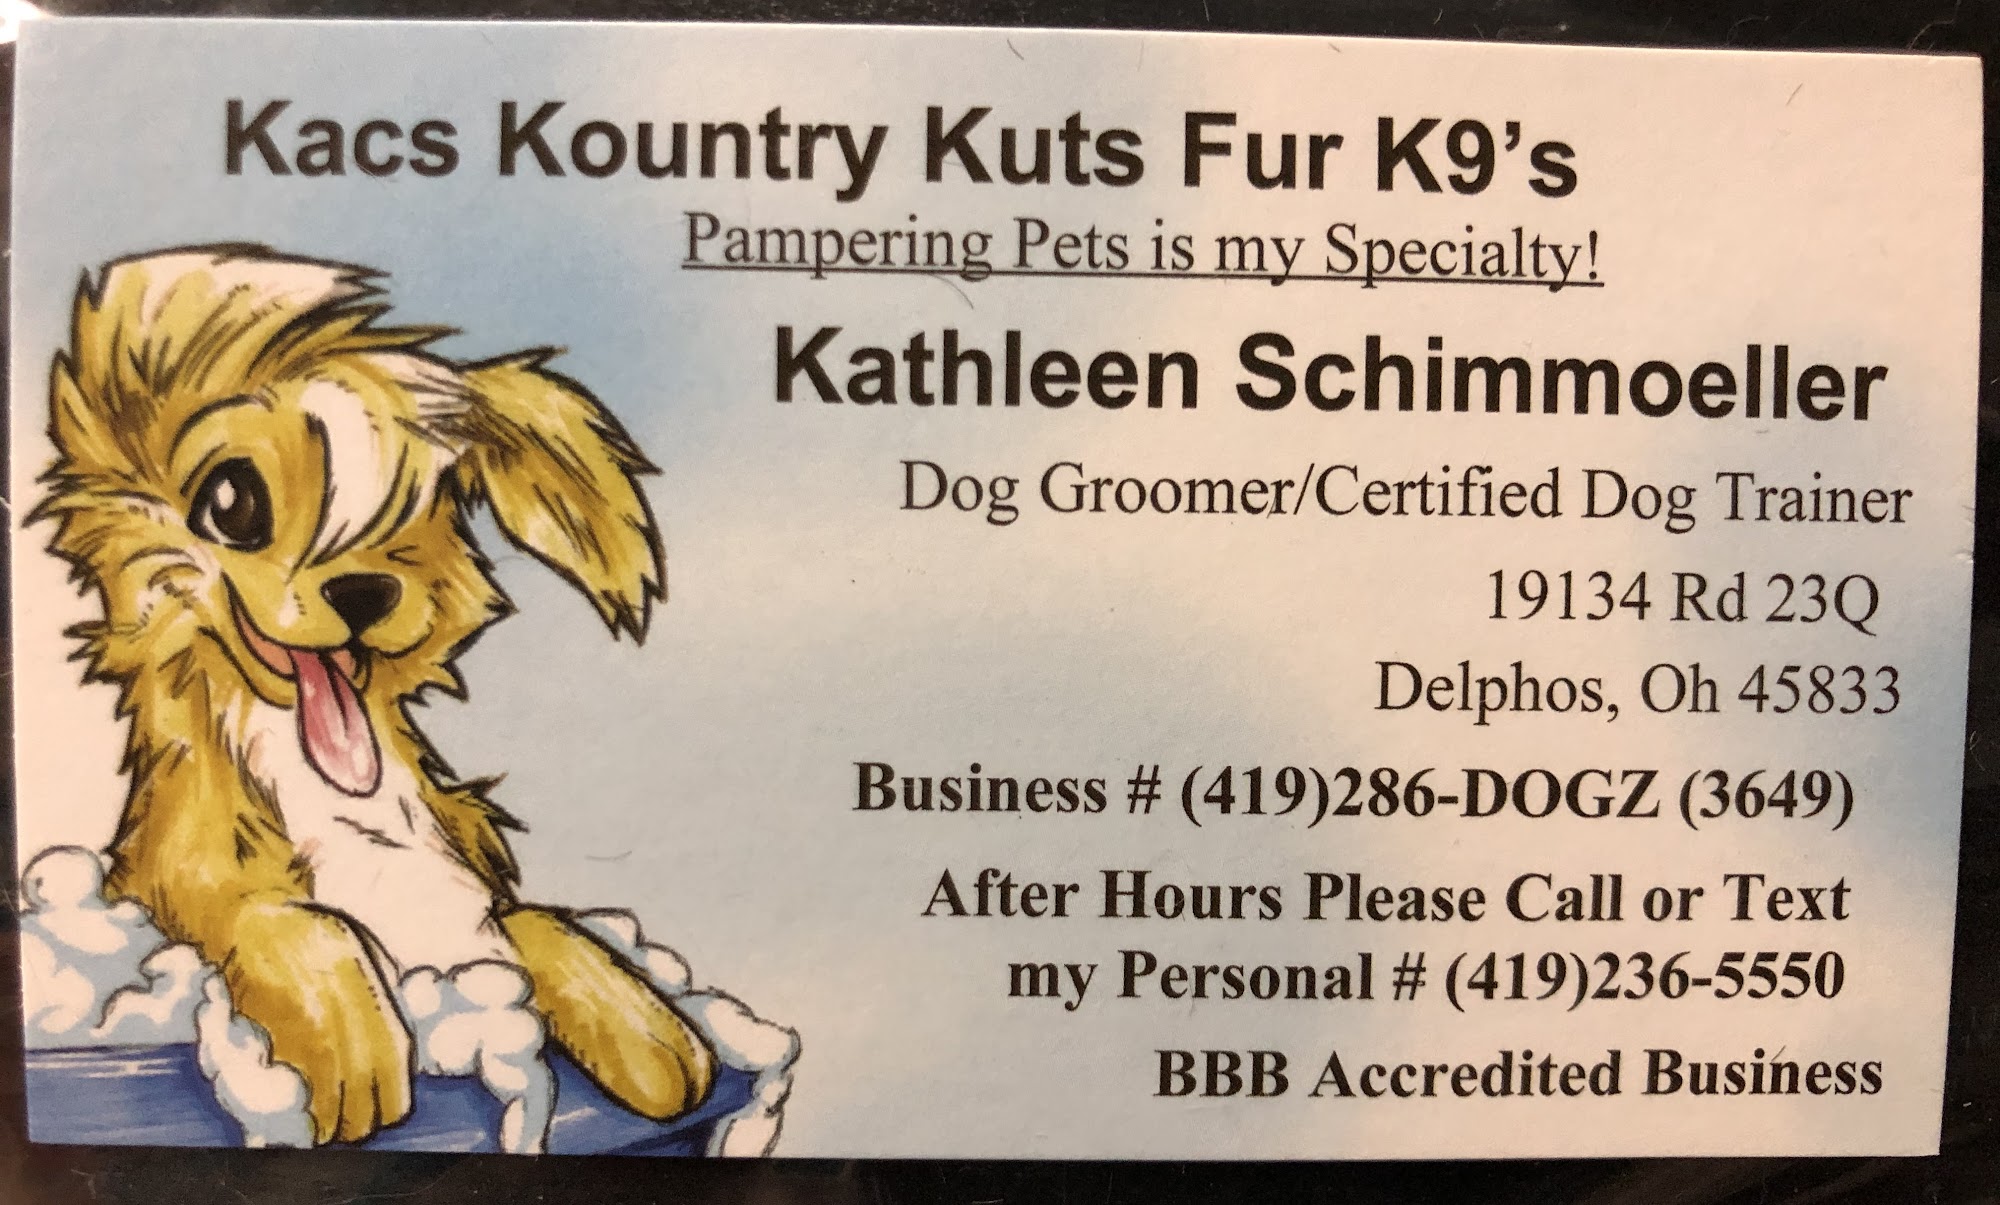 KAC'S Kountry Kuts Fur K9's 19134 Rd 23-Q, Delphos Ohio 45833